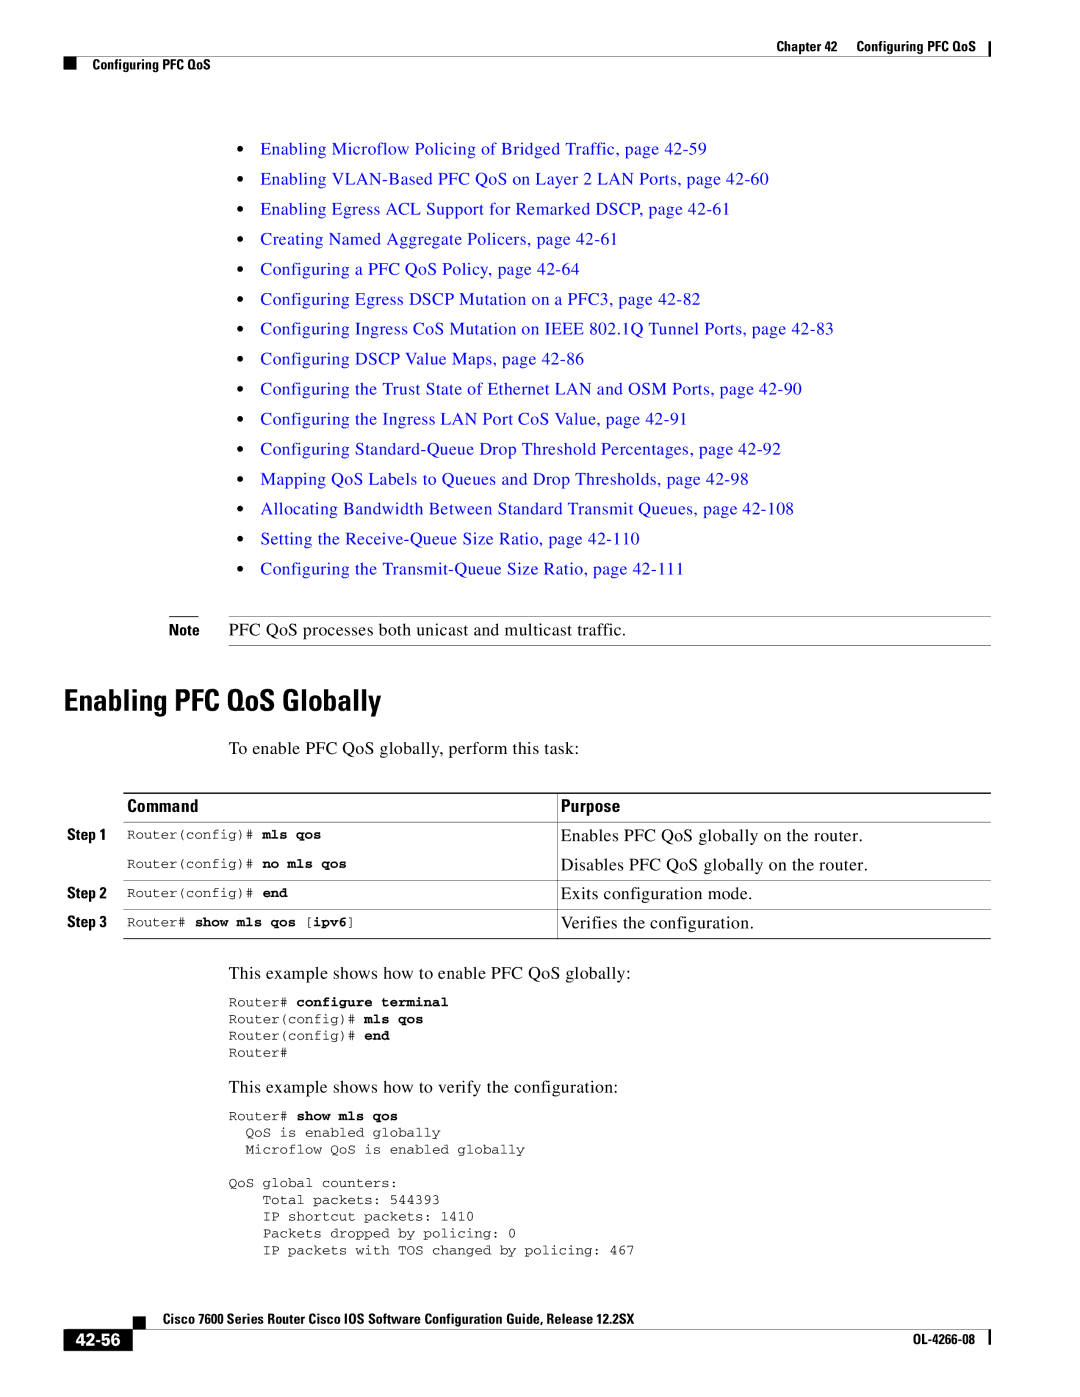 Cisco Systems OL-4266-08 manual Enabling PFC QoS Globally, Command Purpose, 42-56 